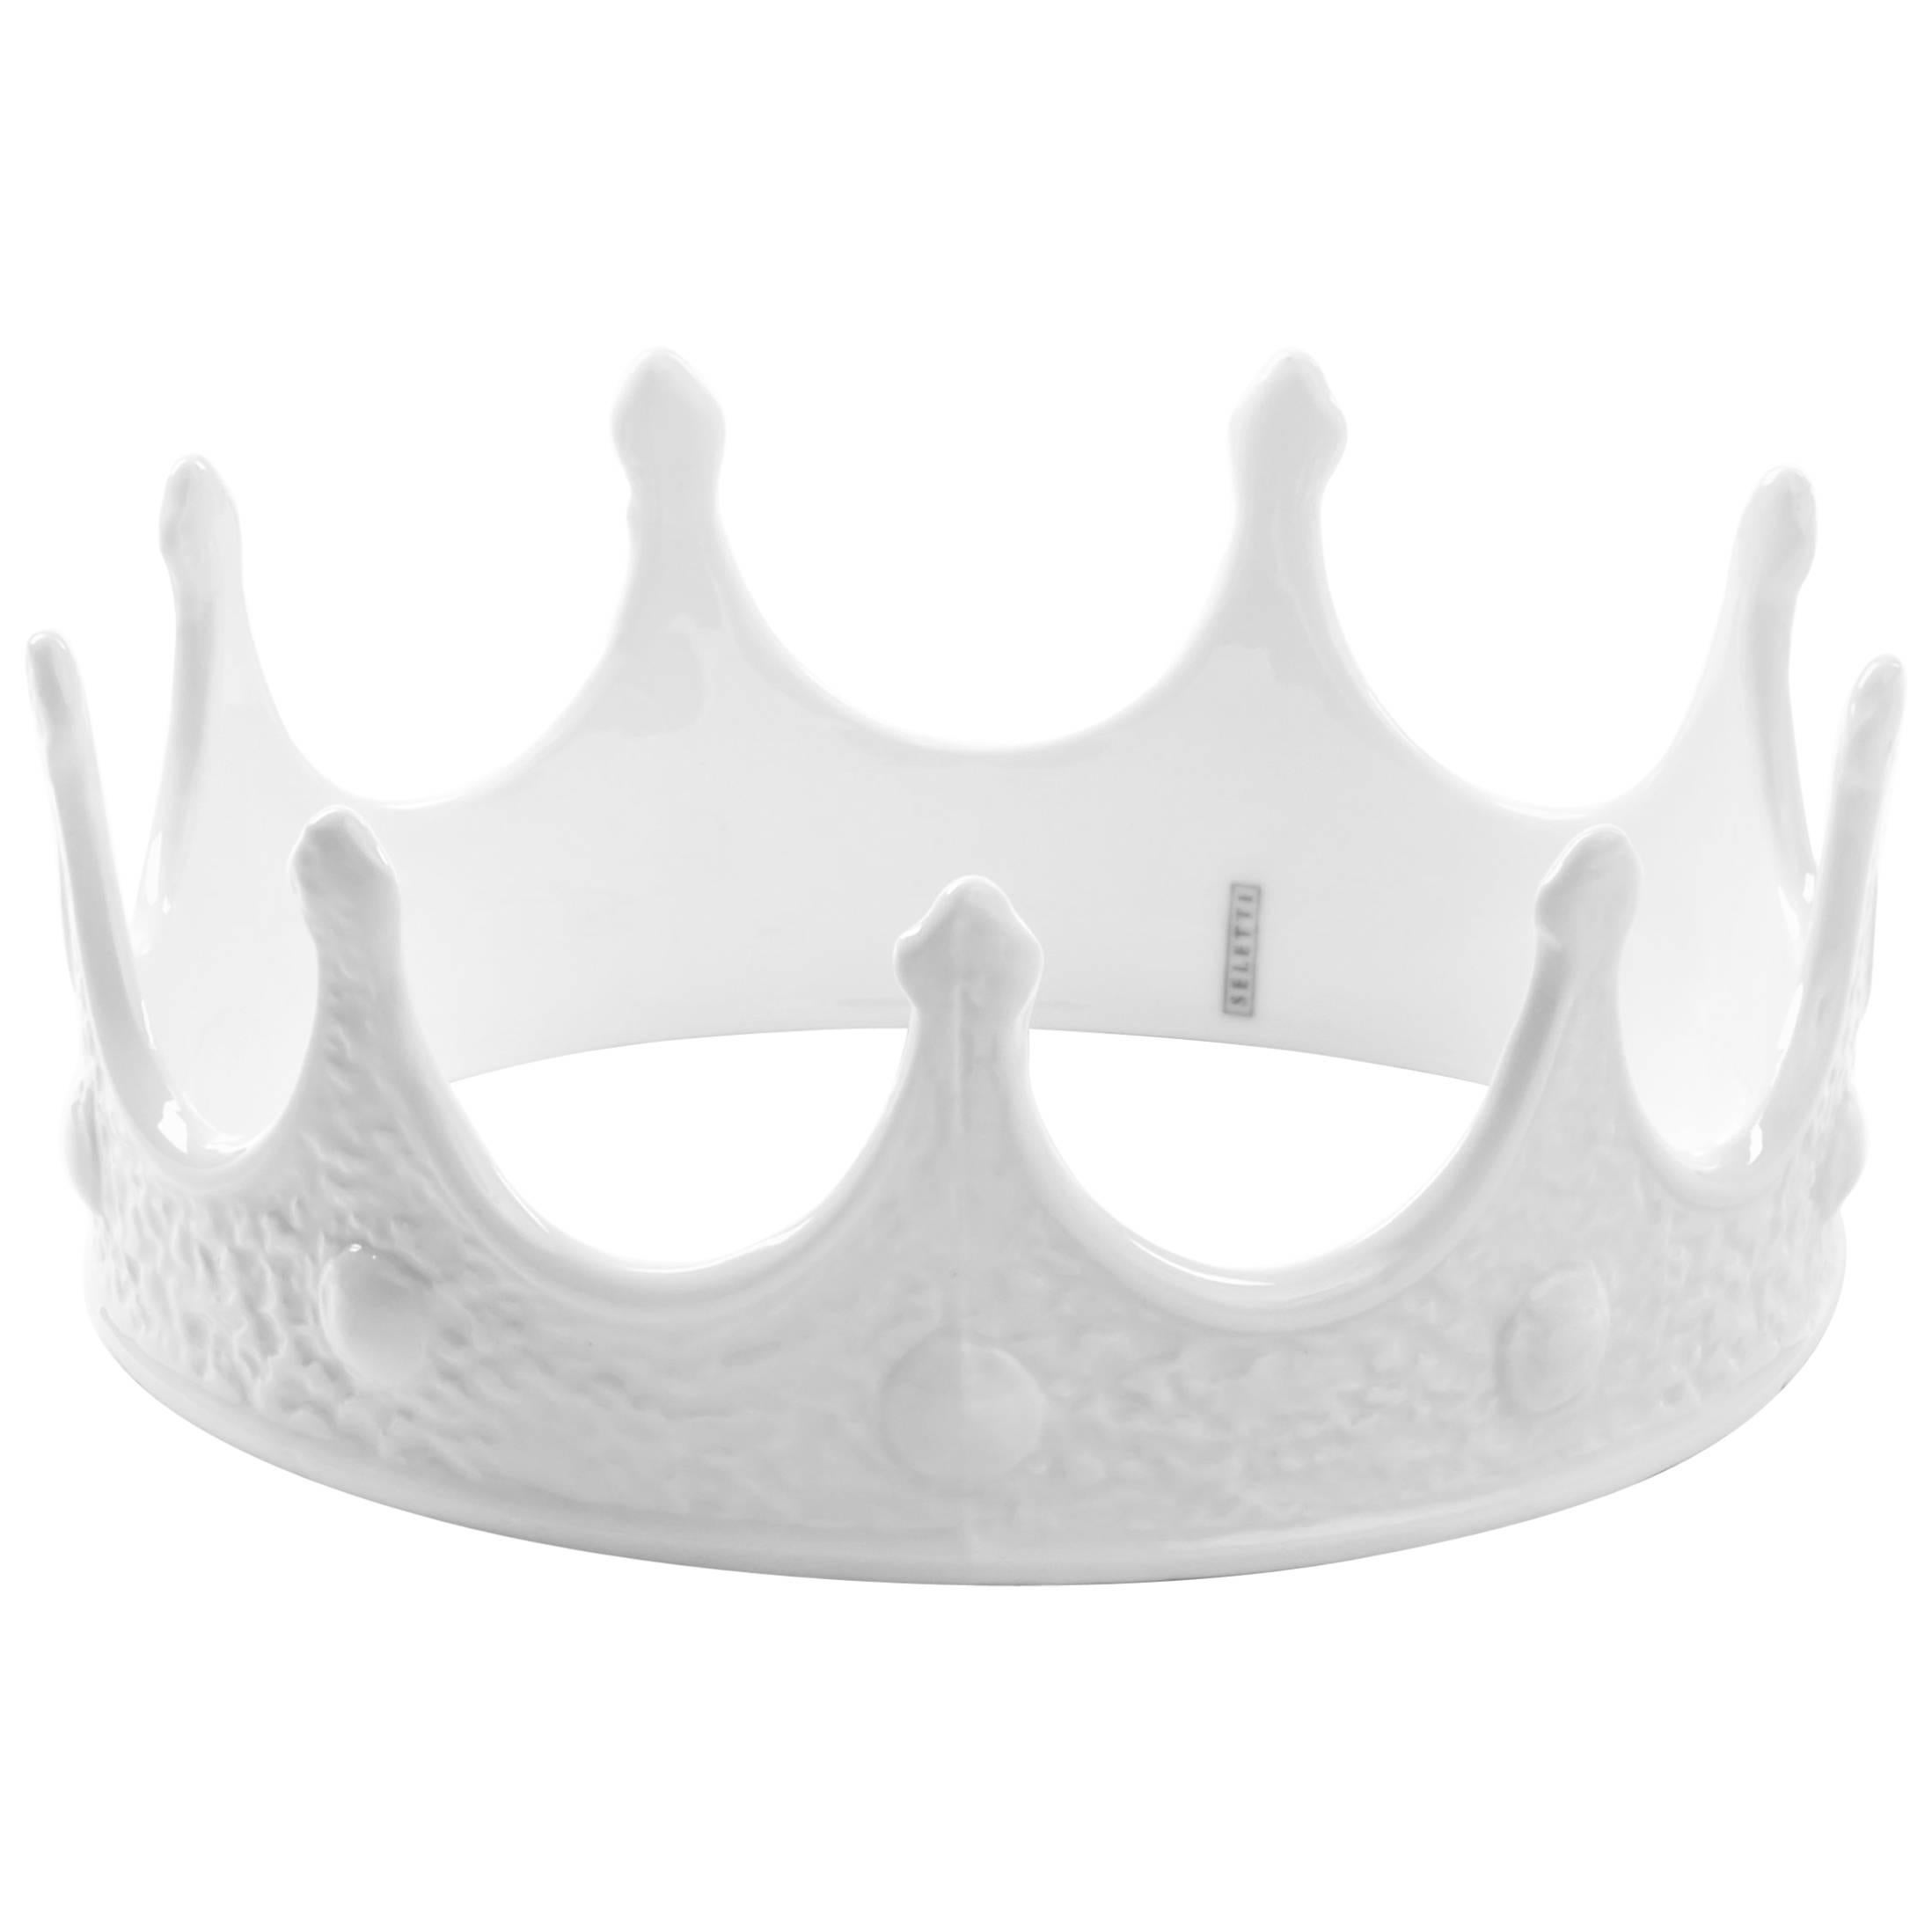 Seletti "Memorabilia" Porcelain My Crown For Sale